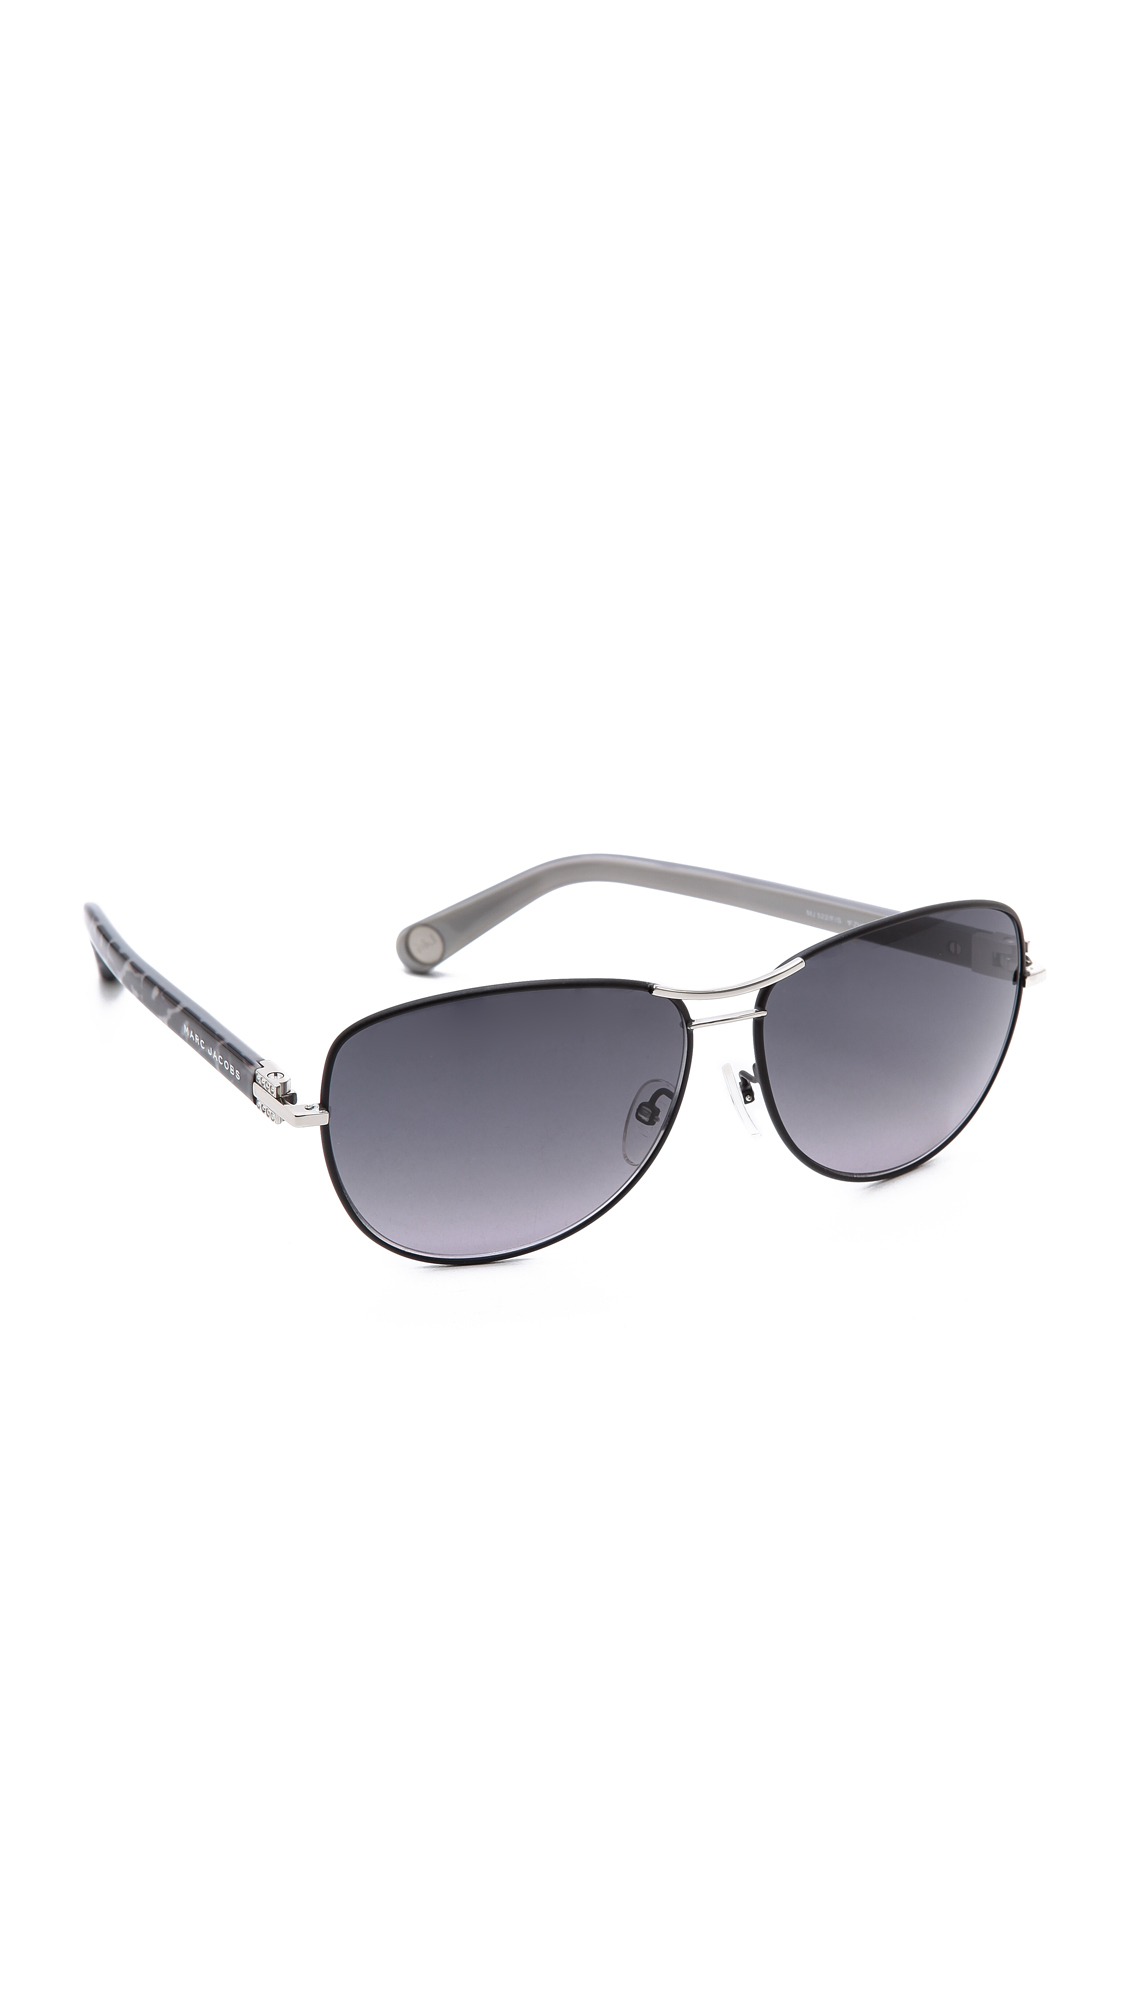 Marc jacobs Aviator Sunglasses - Burgundy/Brown Gradient in Gray | Lyst